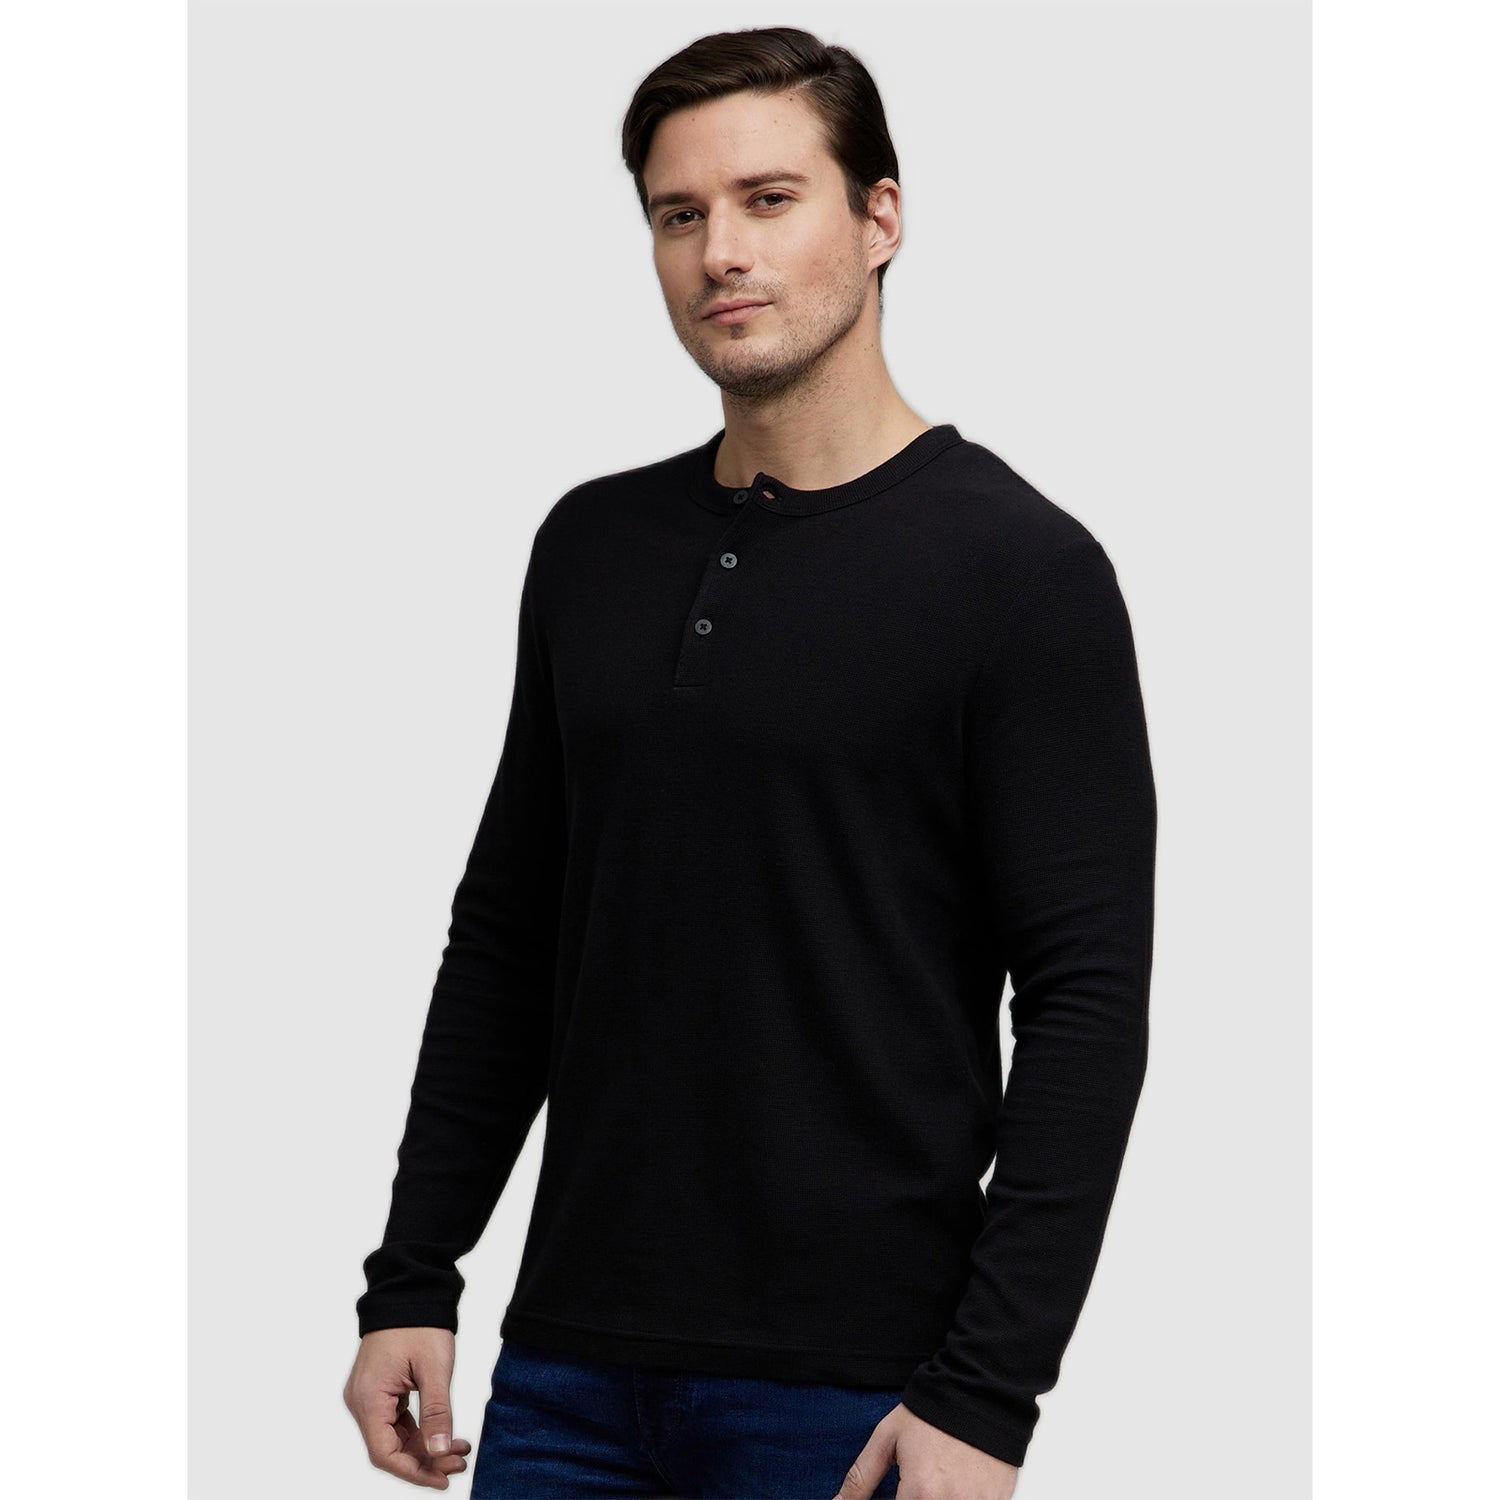 Men's Black Solid T-Shirts (Various Sizes)